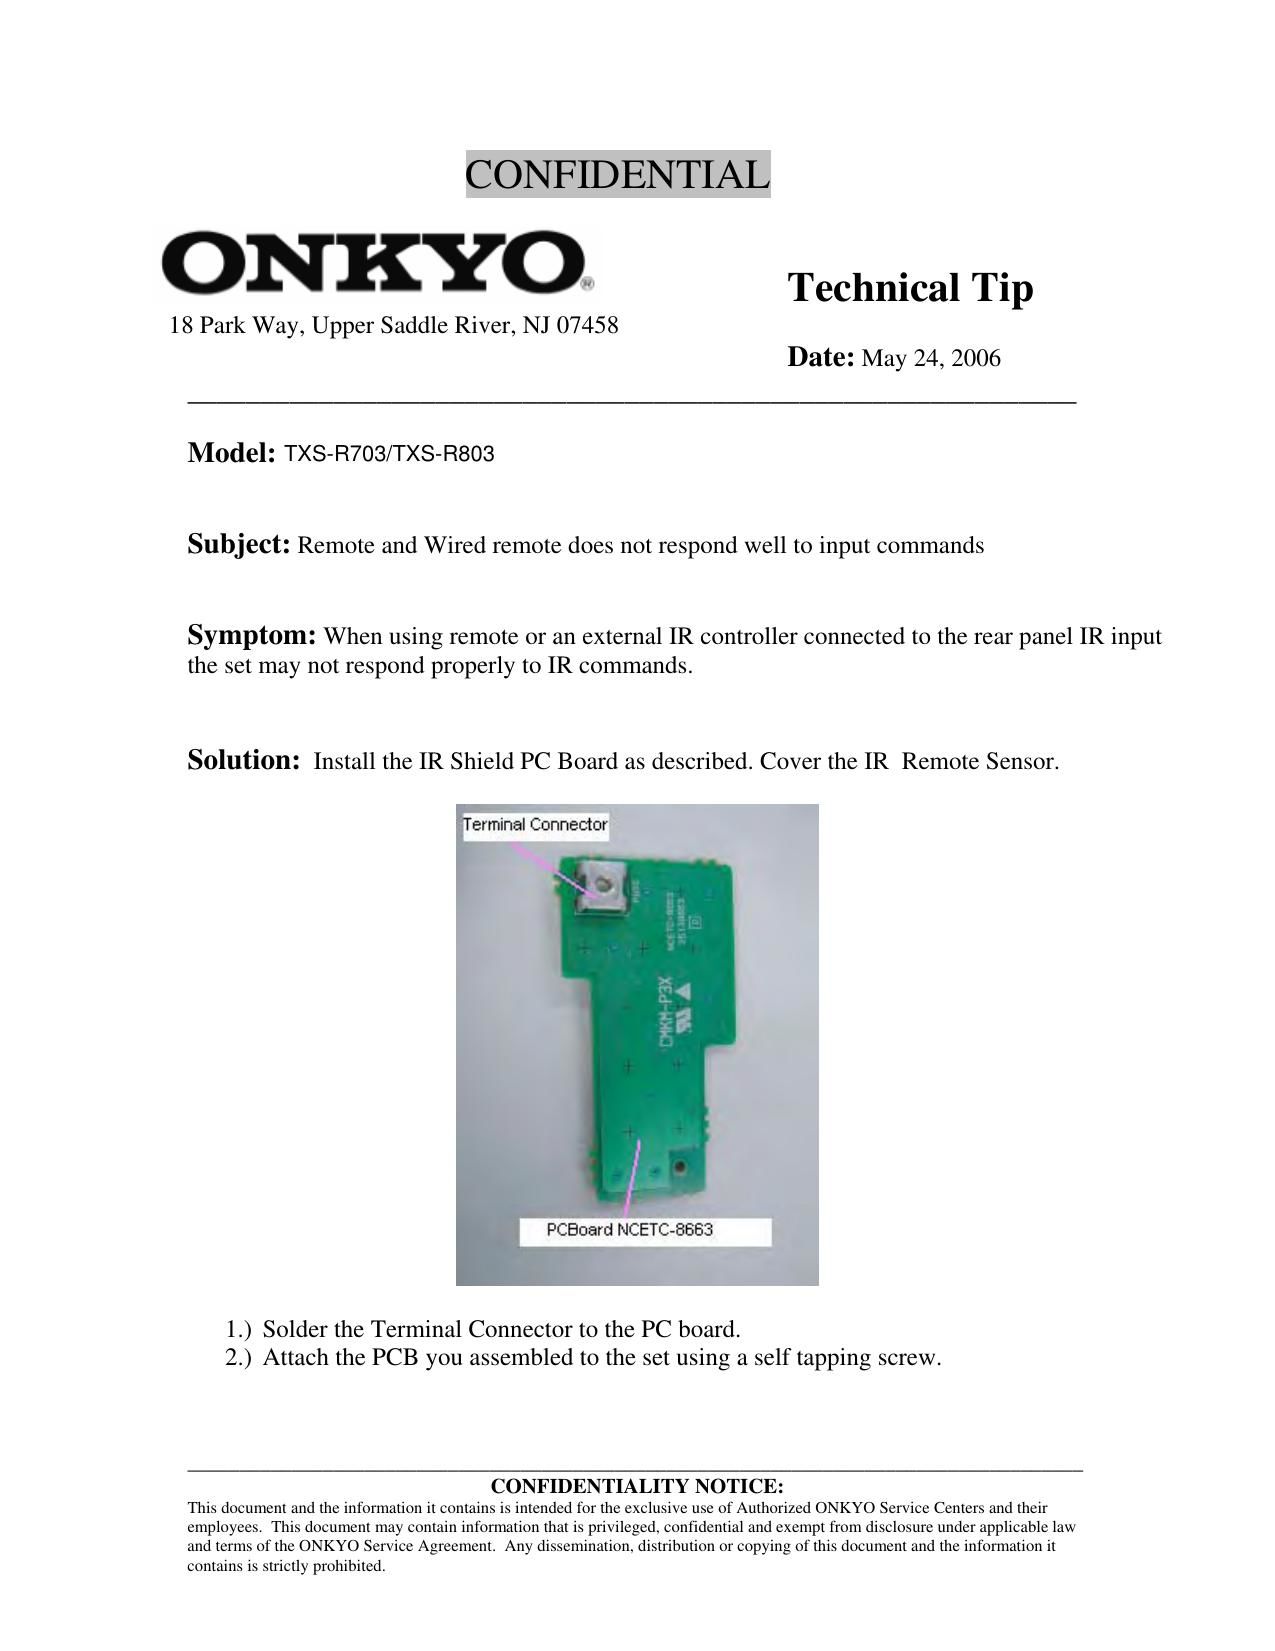 Onkyo TXRS 703 Service Information